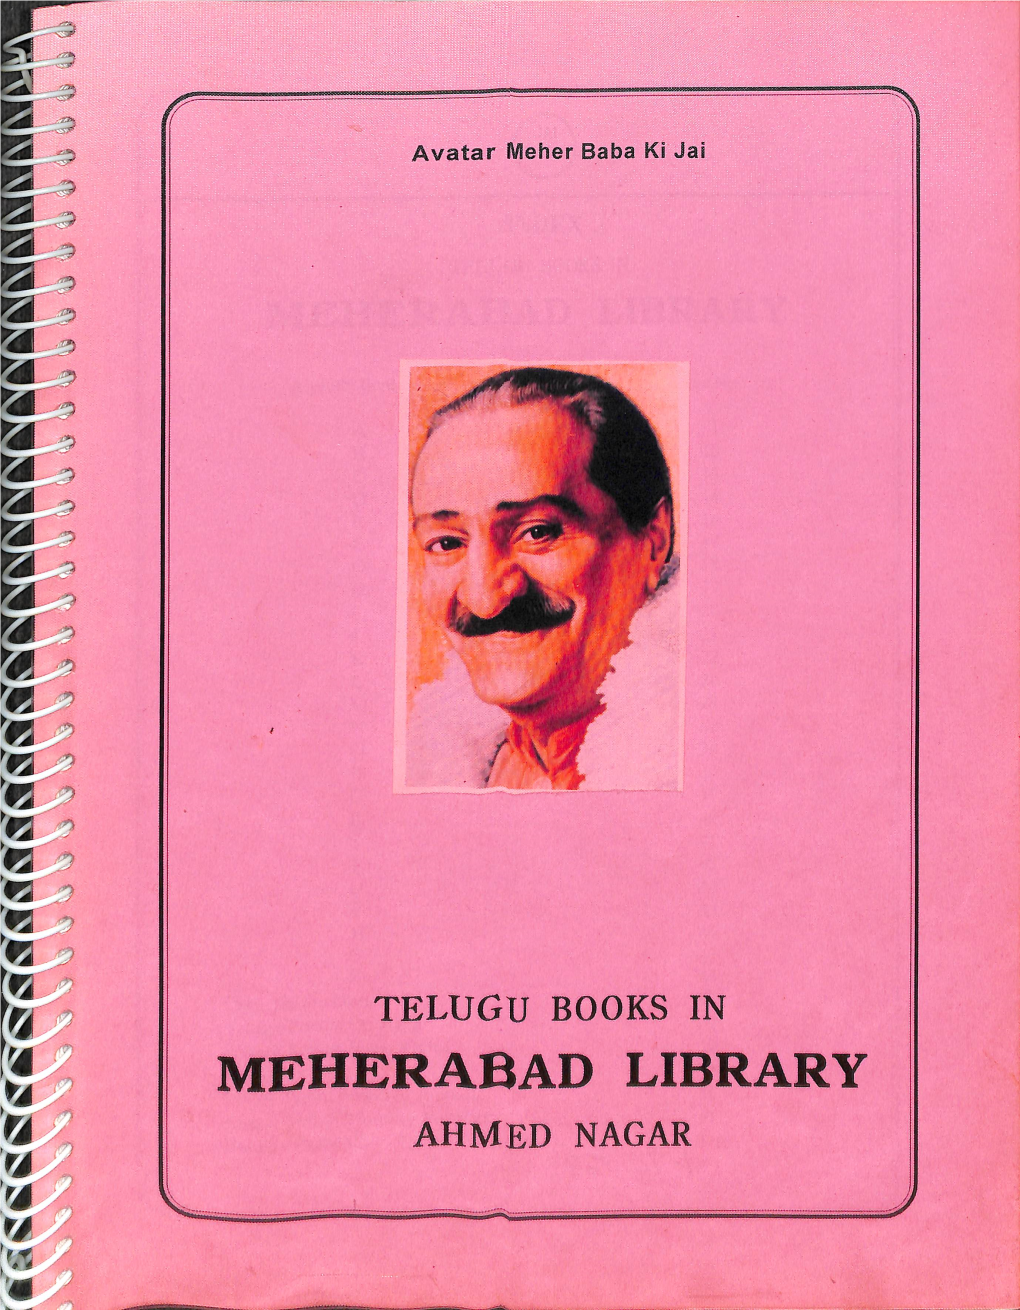 Meherabad Library